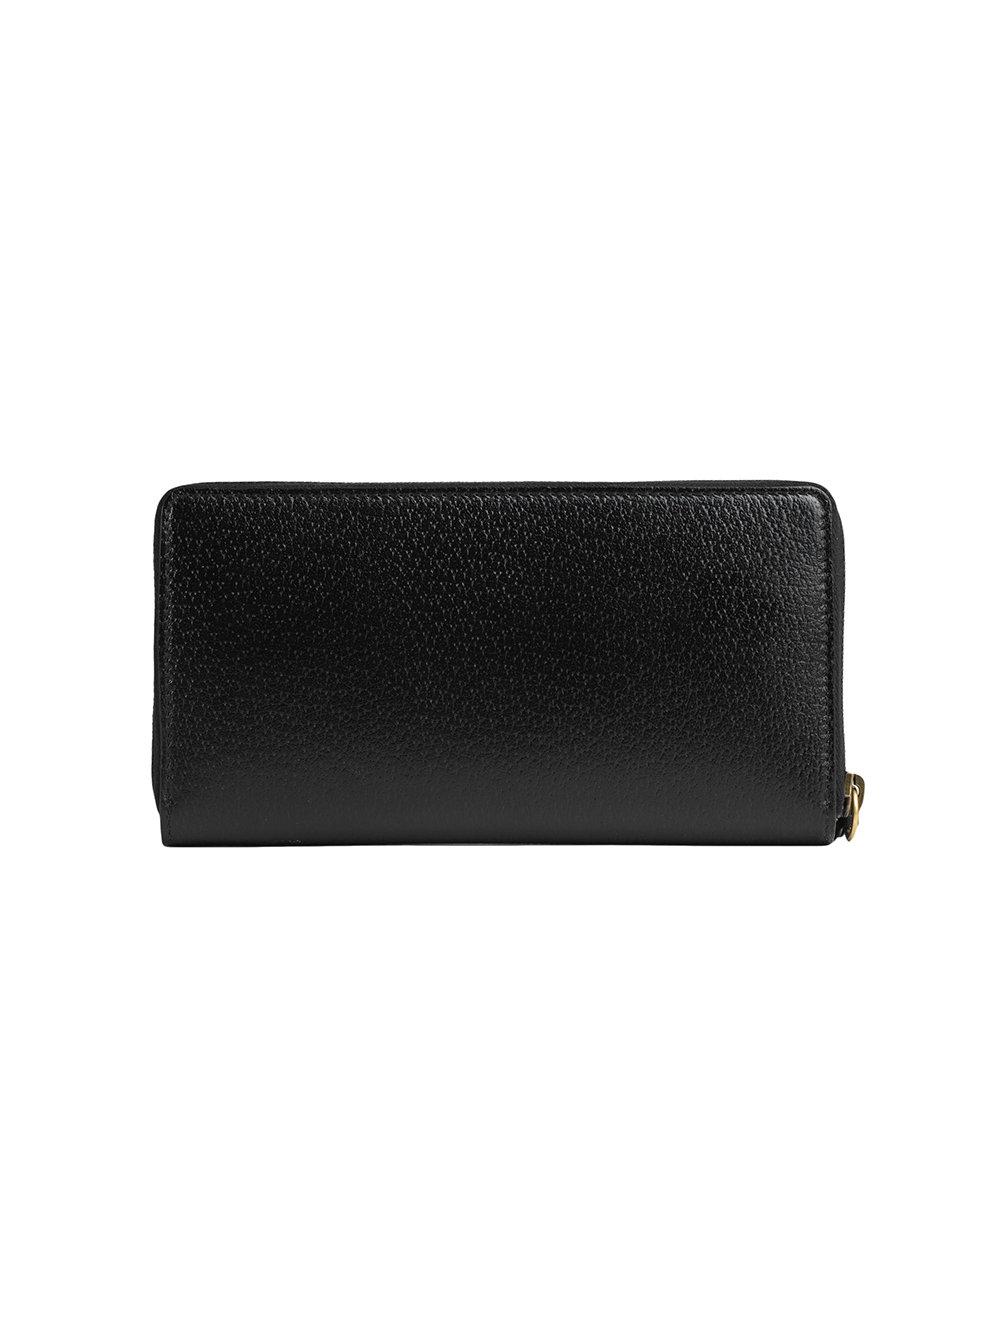 Gucci Animalier Leather Zip Around Wallet in Black for Men - Lyst